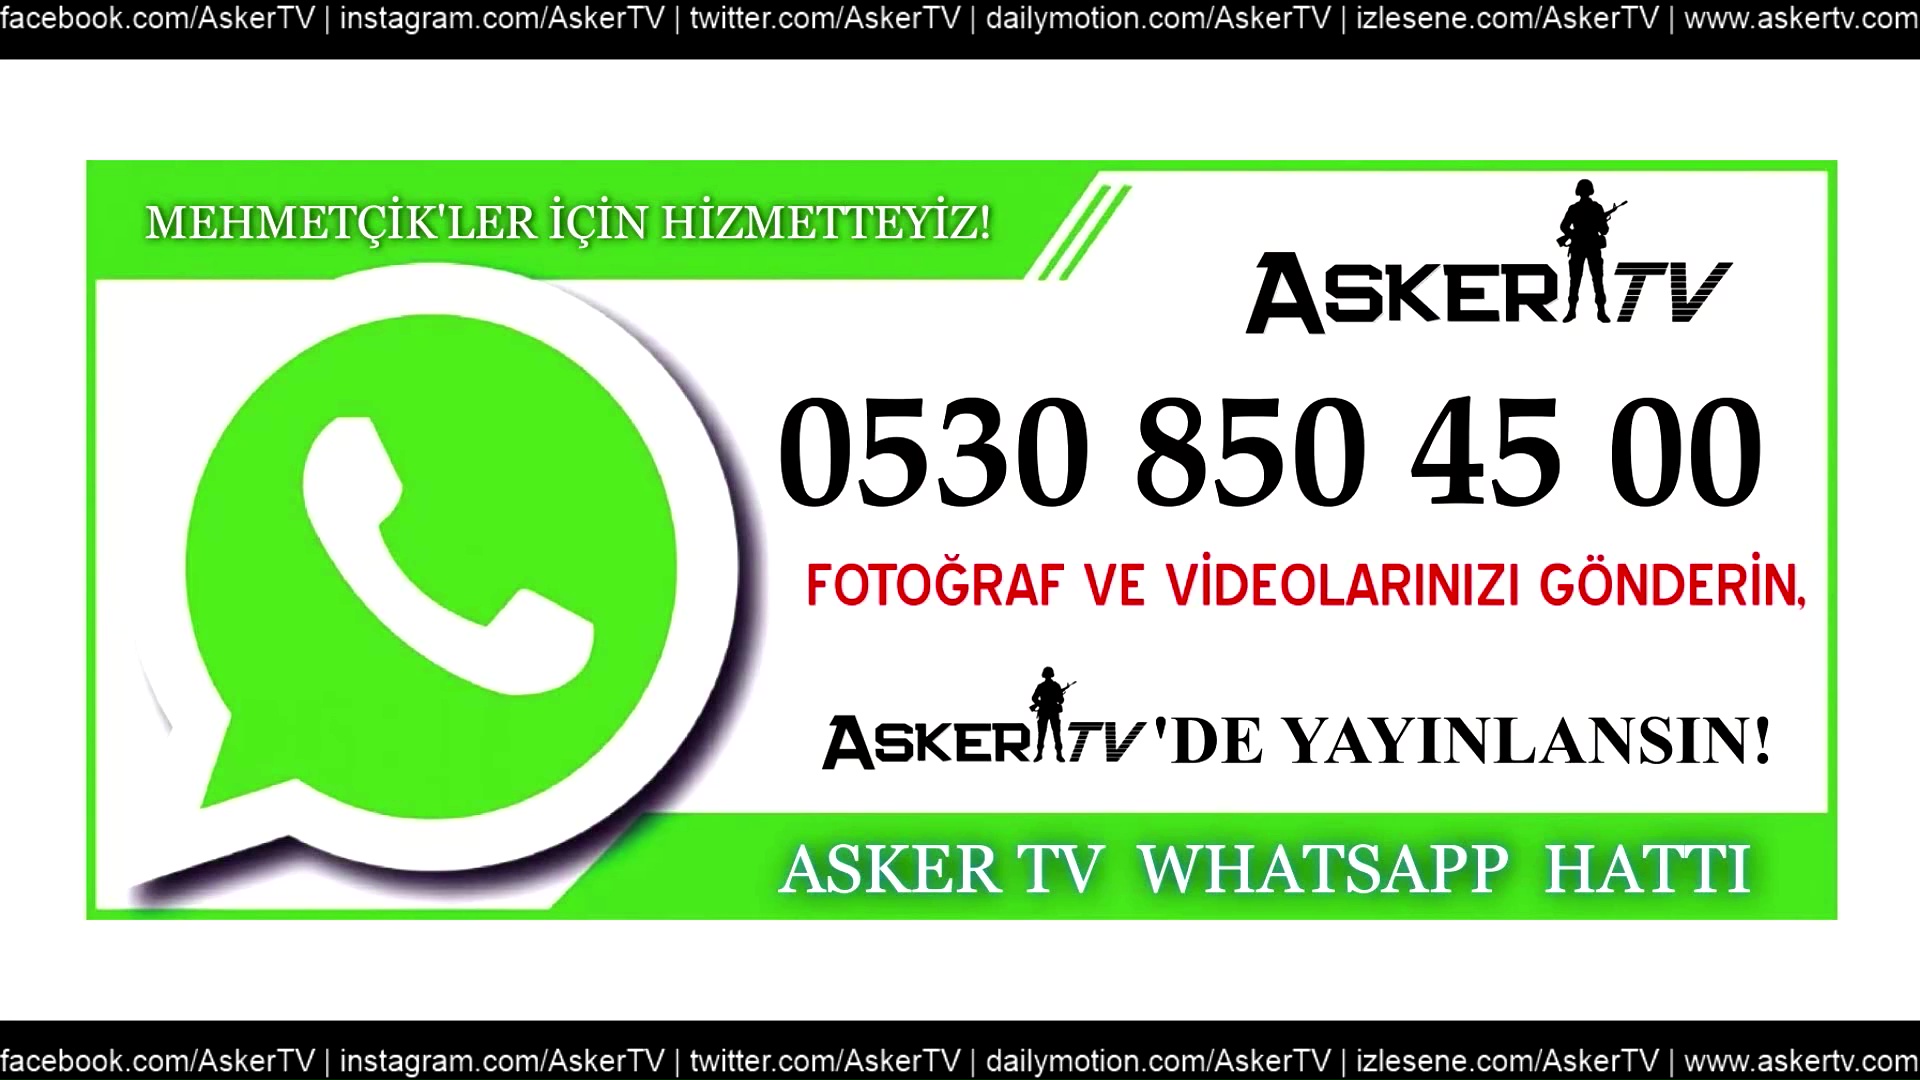 asker-tv-whatsapp-iletisim-hatti